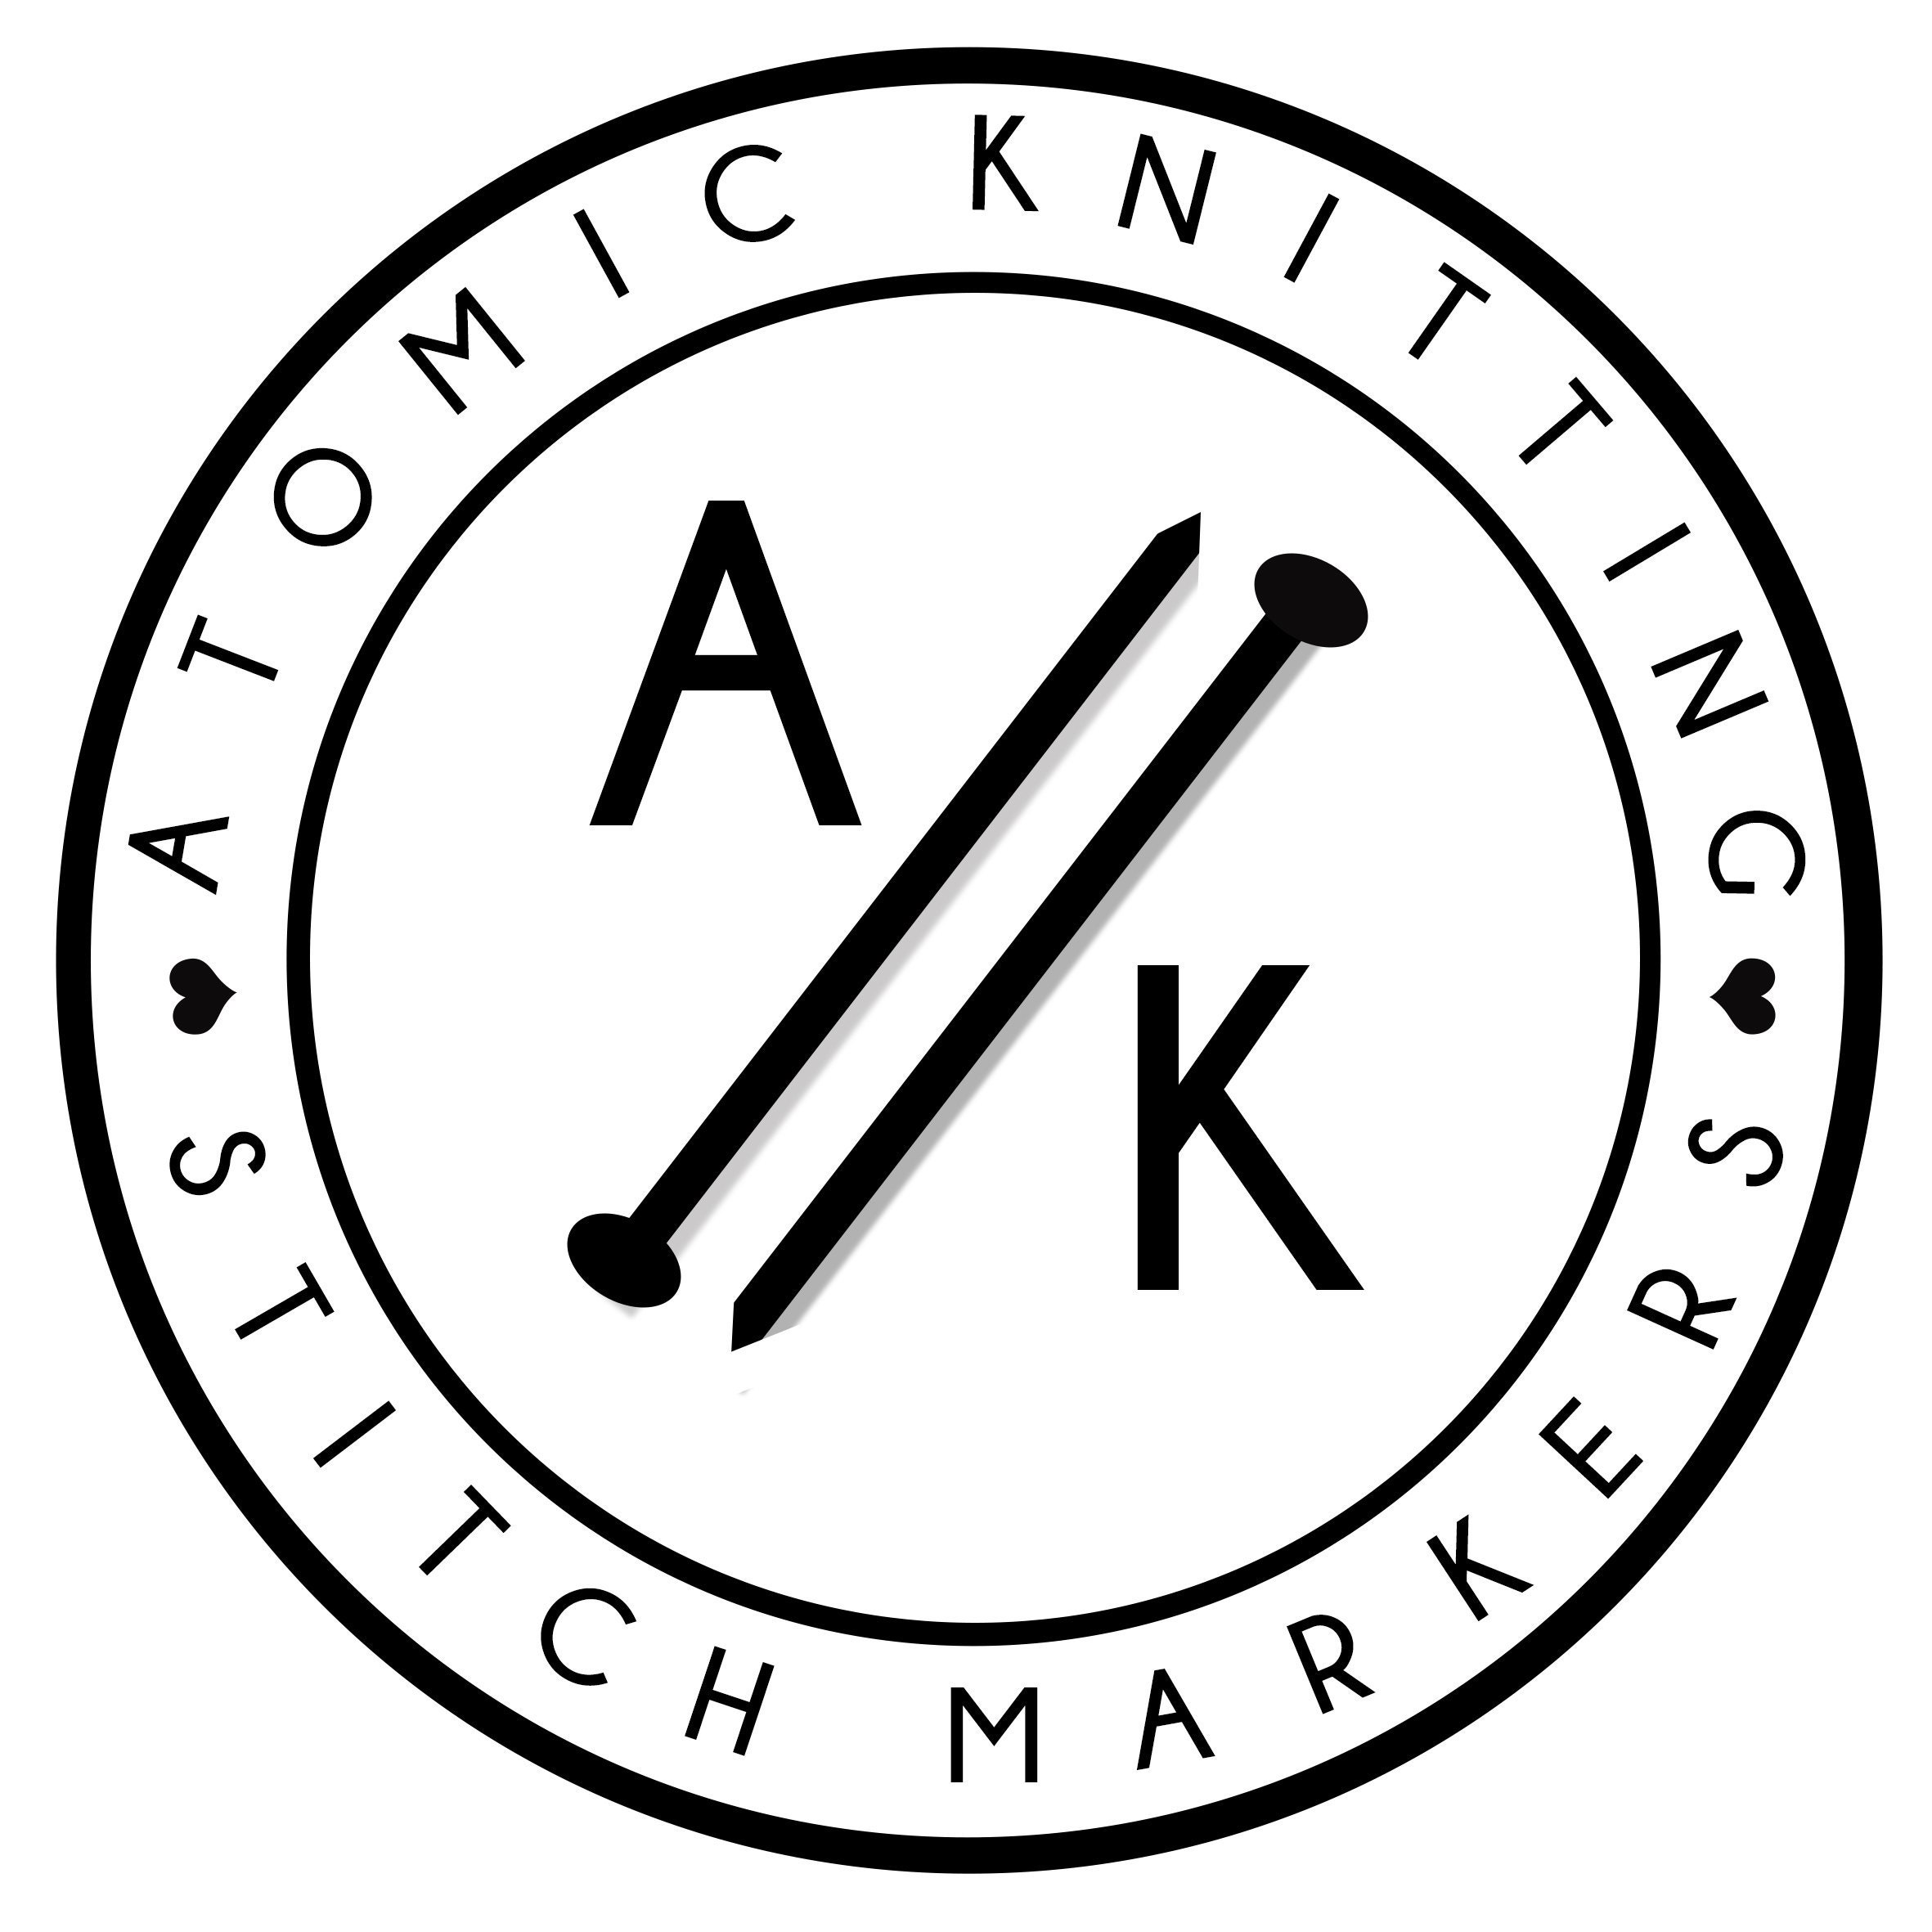 NEW! Purple Celtic Knot Cardigan Shawl Clip Pin Fastener UK - Atomic  Knitting